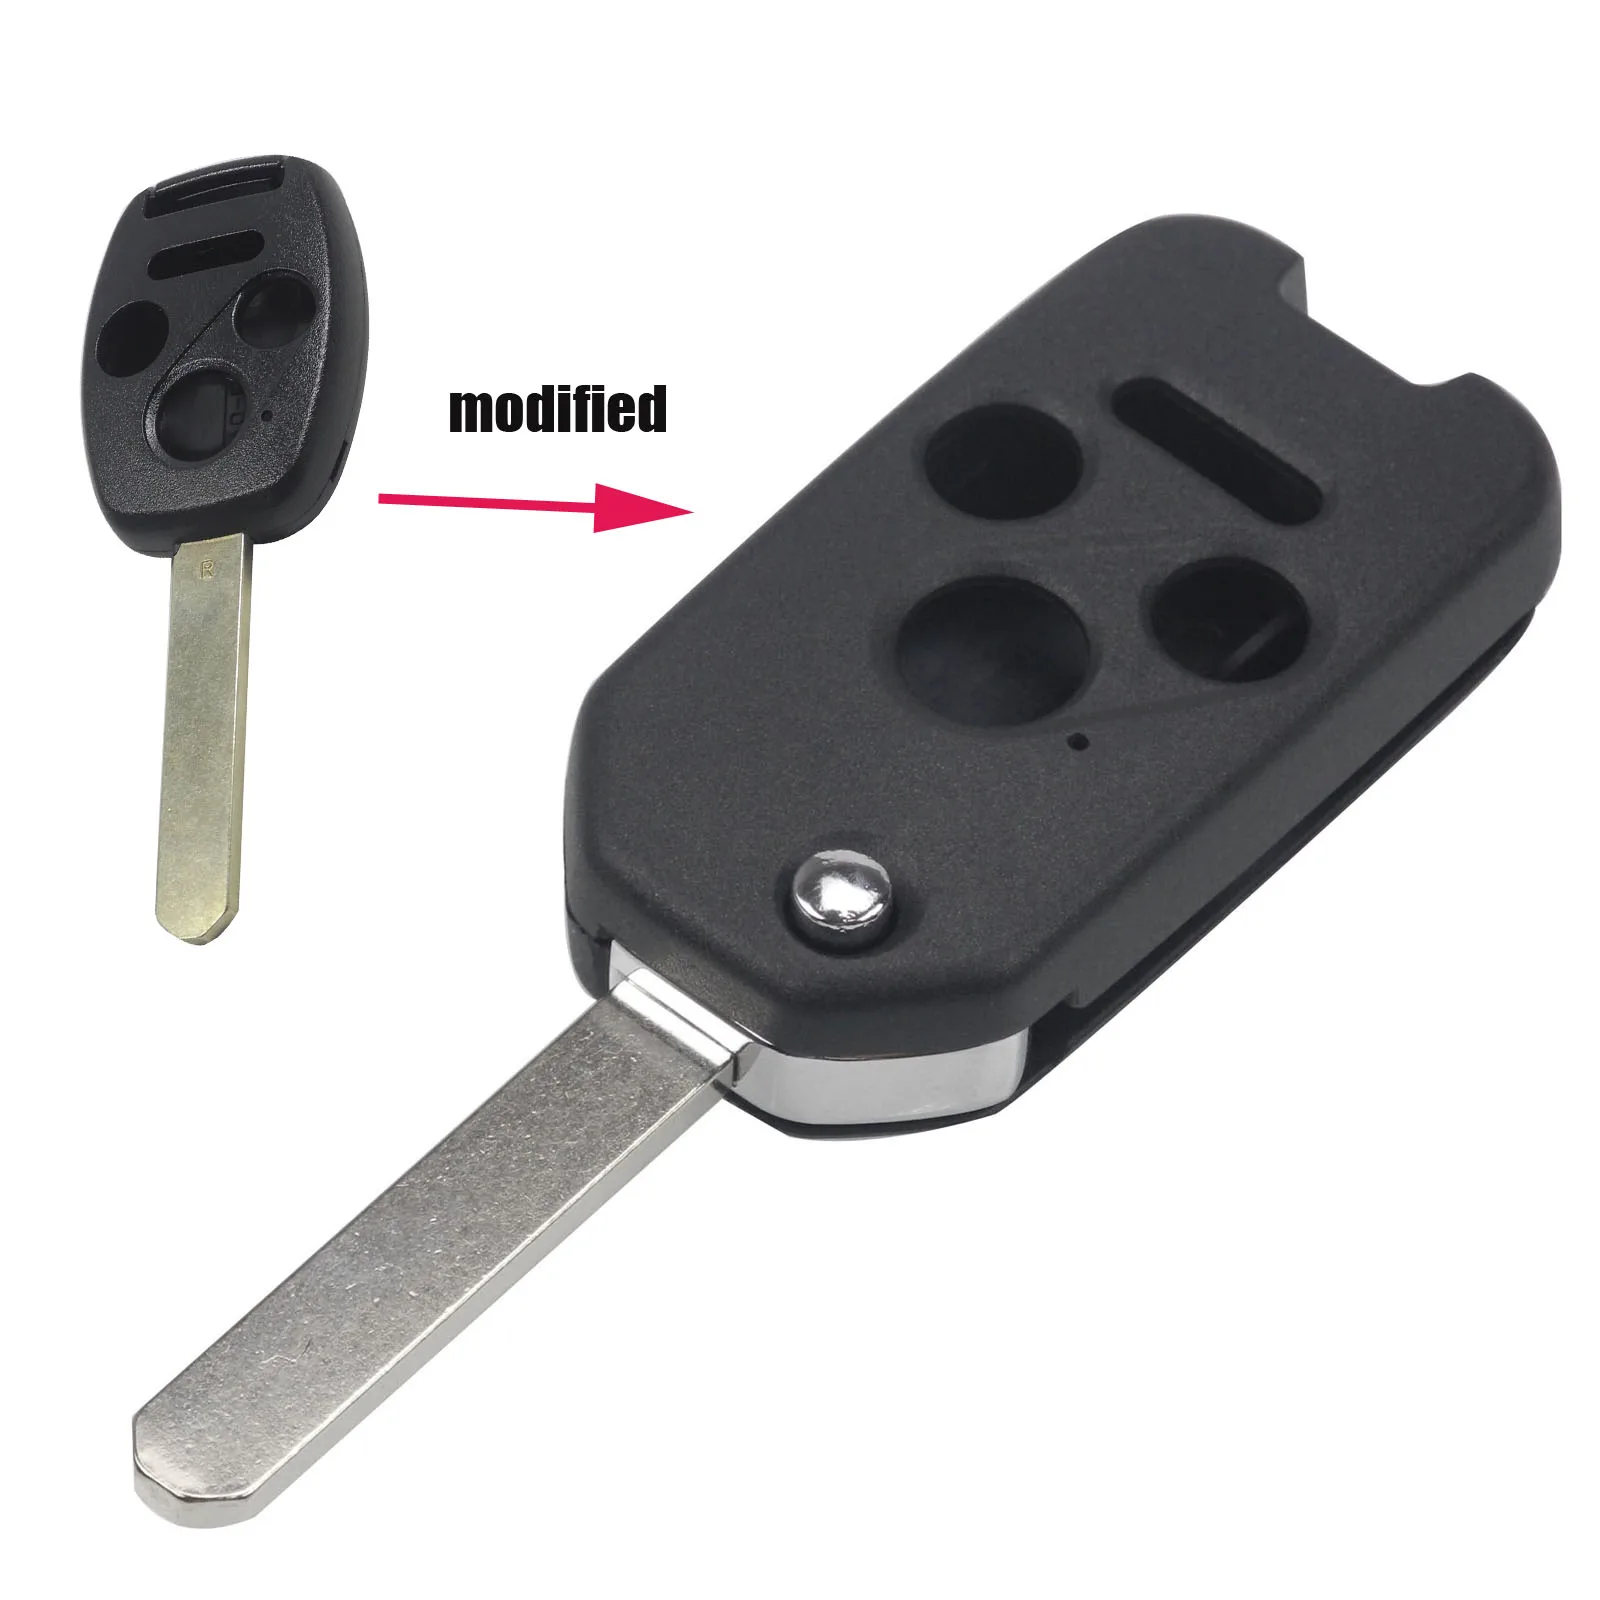 Jingyuqin Blade 3+ 1 2+ 1 2/3 кнопки складной откидная оболочка ключа дистанционного управления чехол для Honda Odyssey Rigeline Accord CRV Civic - Количество кнопок: 3B WITH PANIC